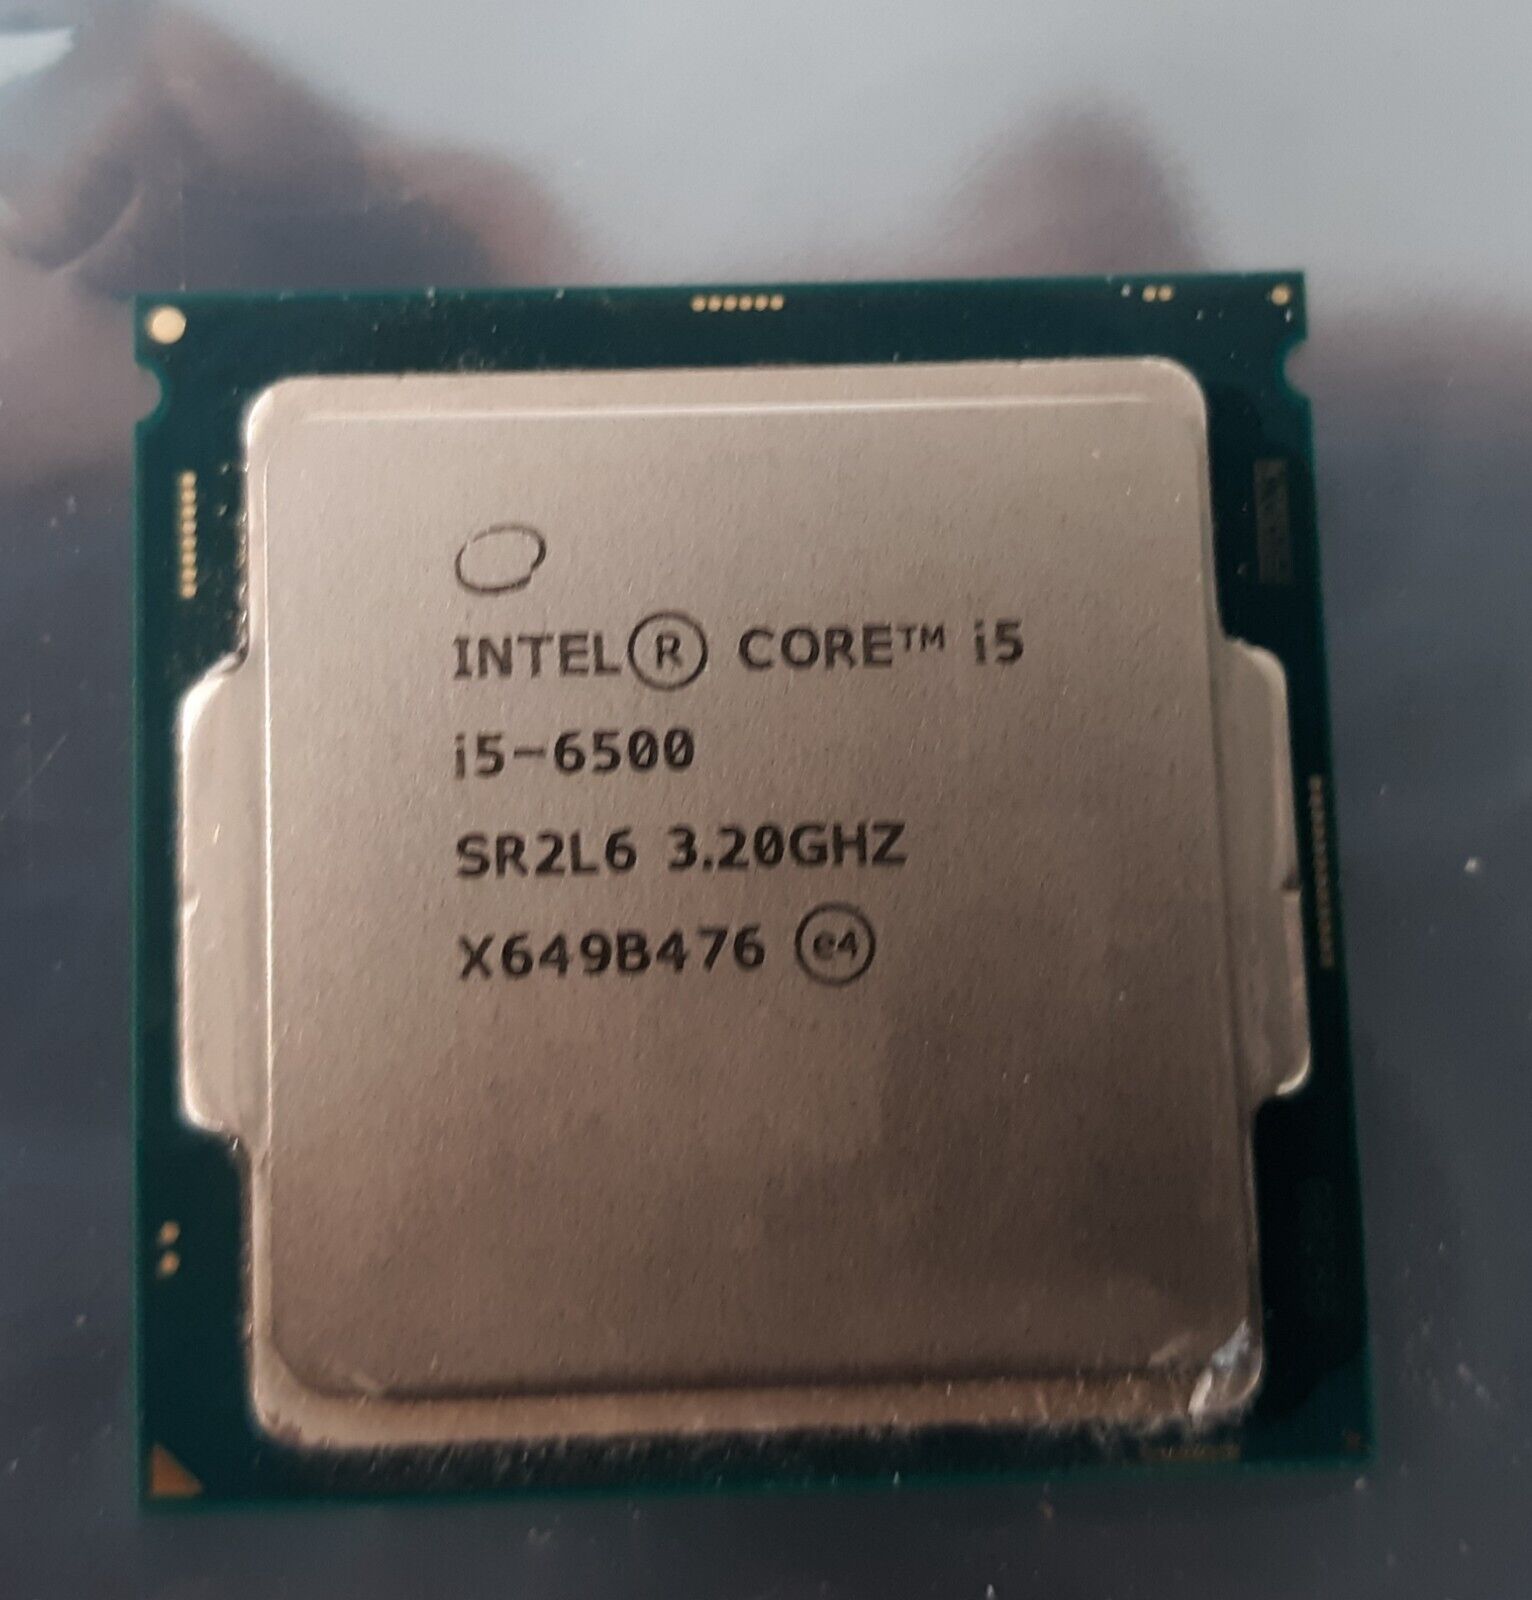 Intel Core i5-6500 SR2L6 3.20GHz CPU Processor *AS IS*